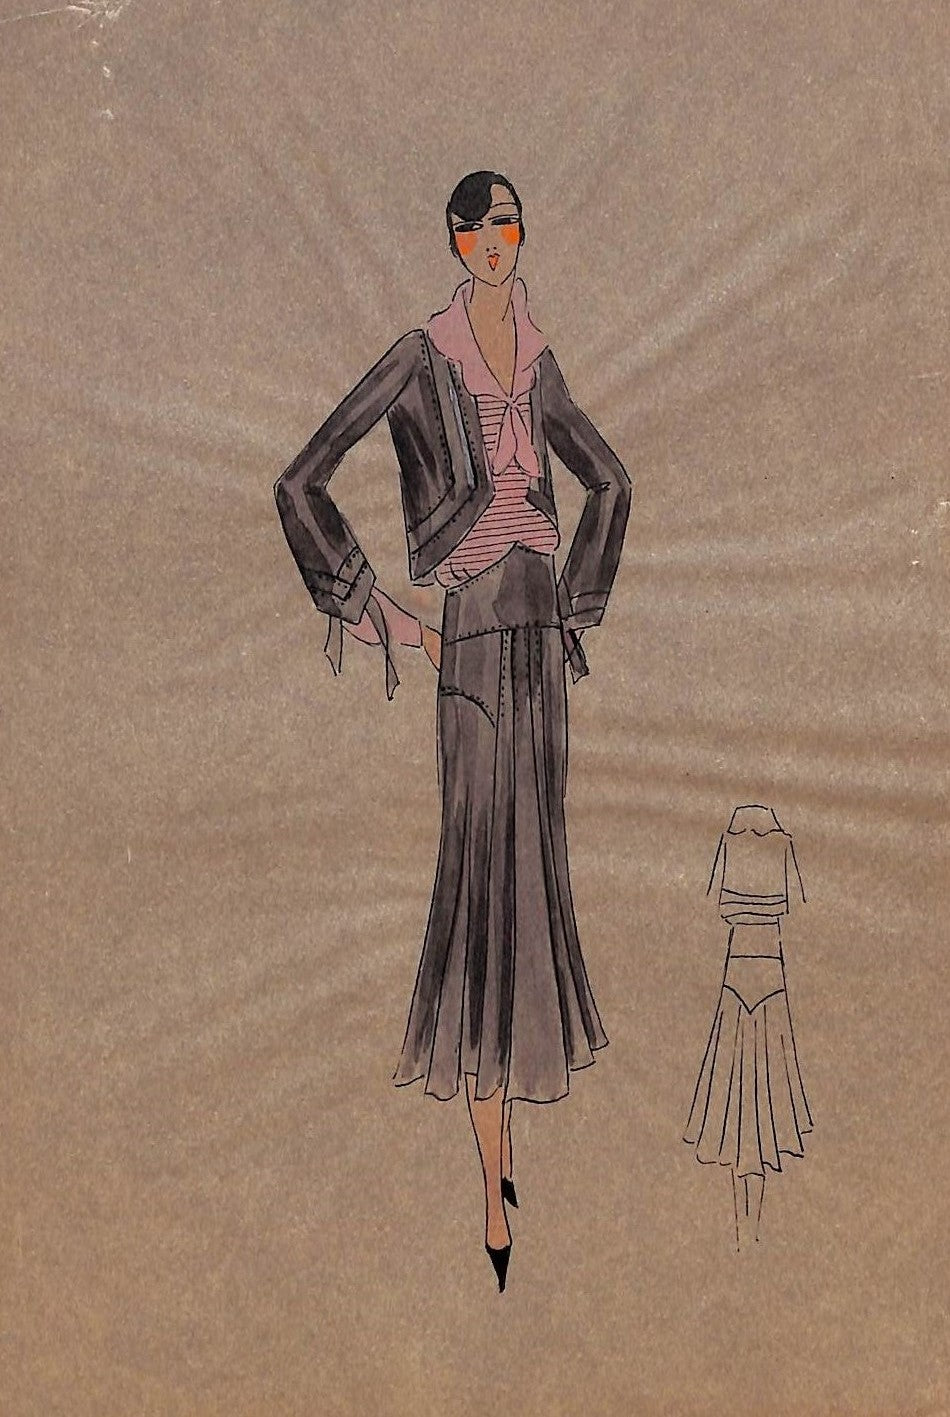 Lanvin of Paris c1920s Original Fashion Illustration in Gouache (SOLD)